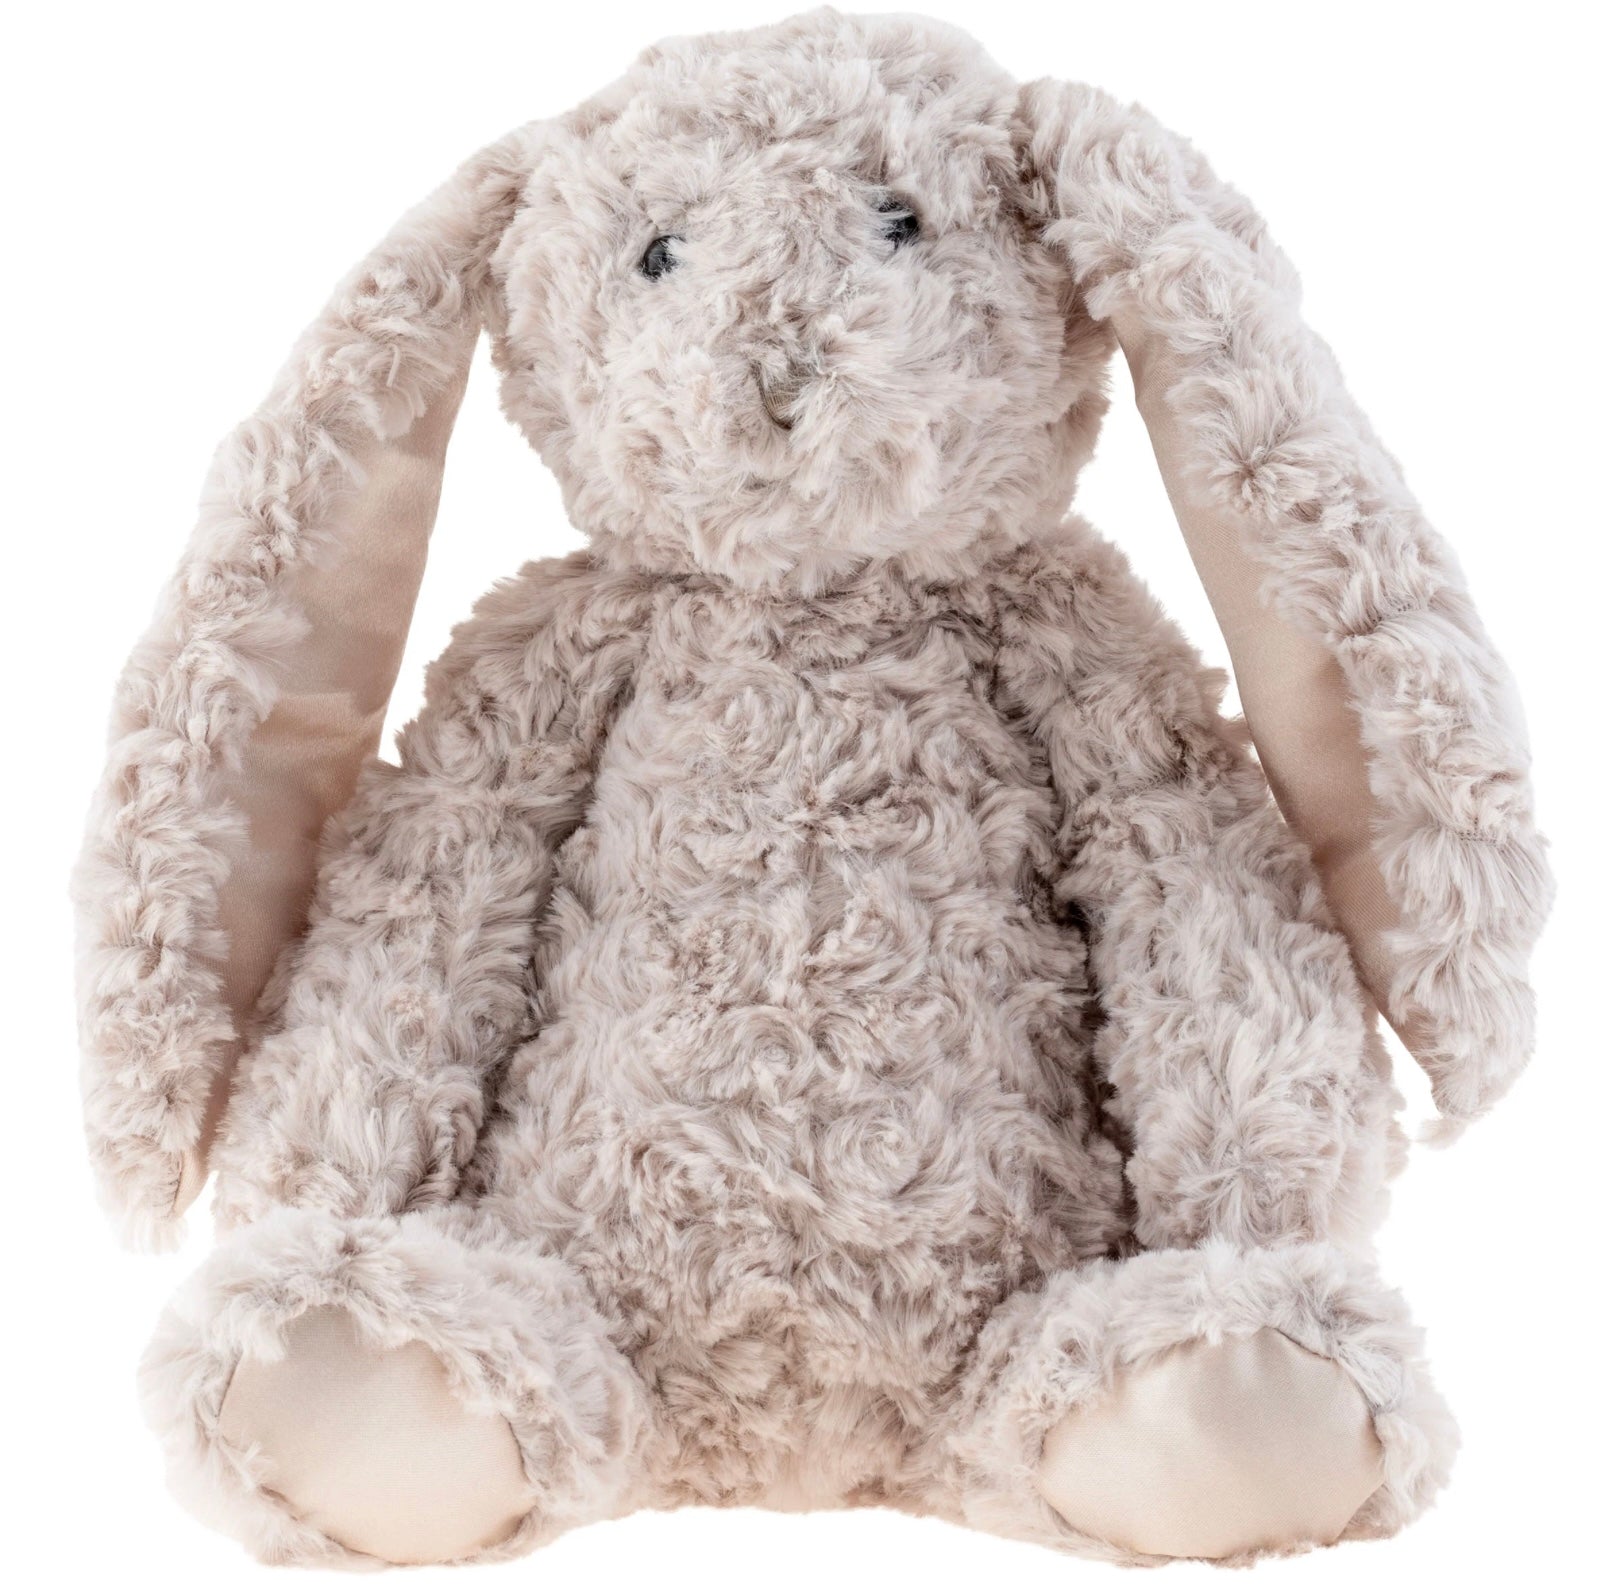 Cuddle Plush Doll - Bunny Gray